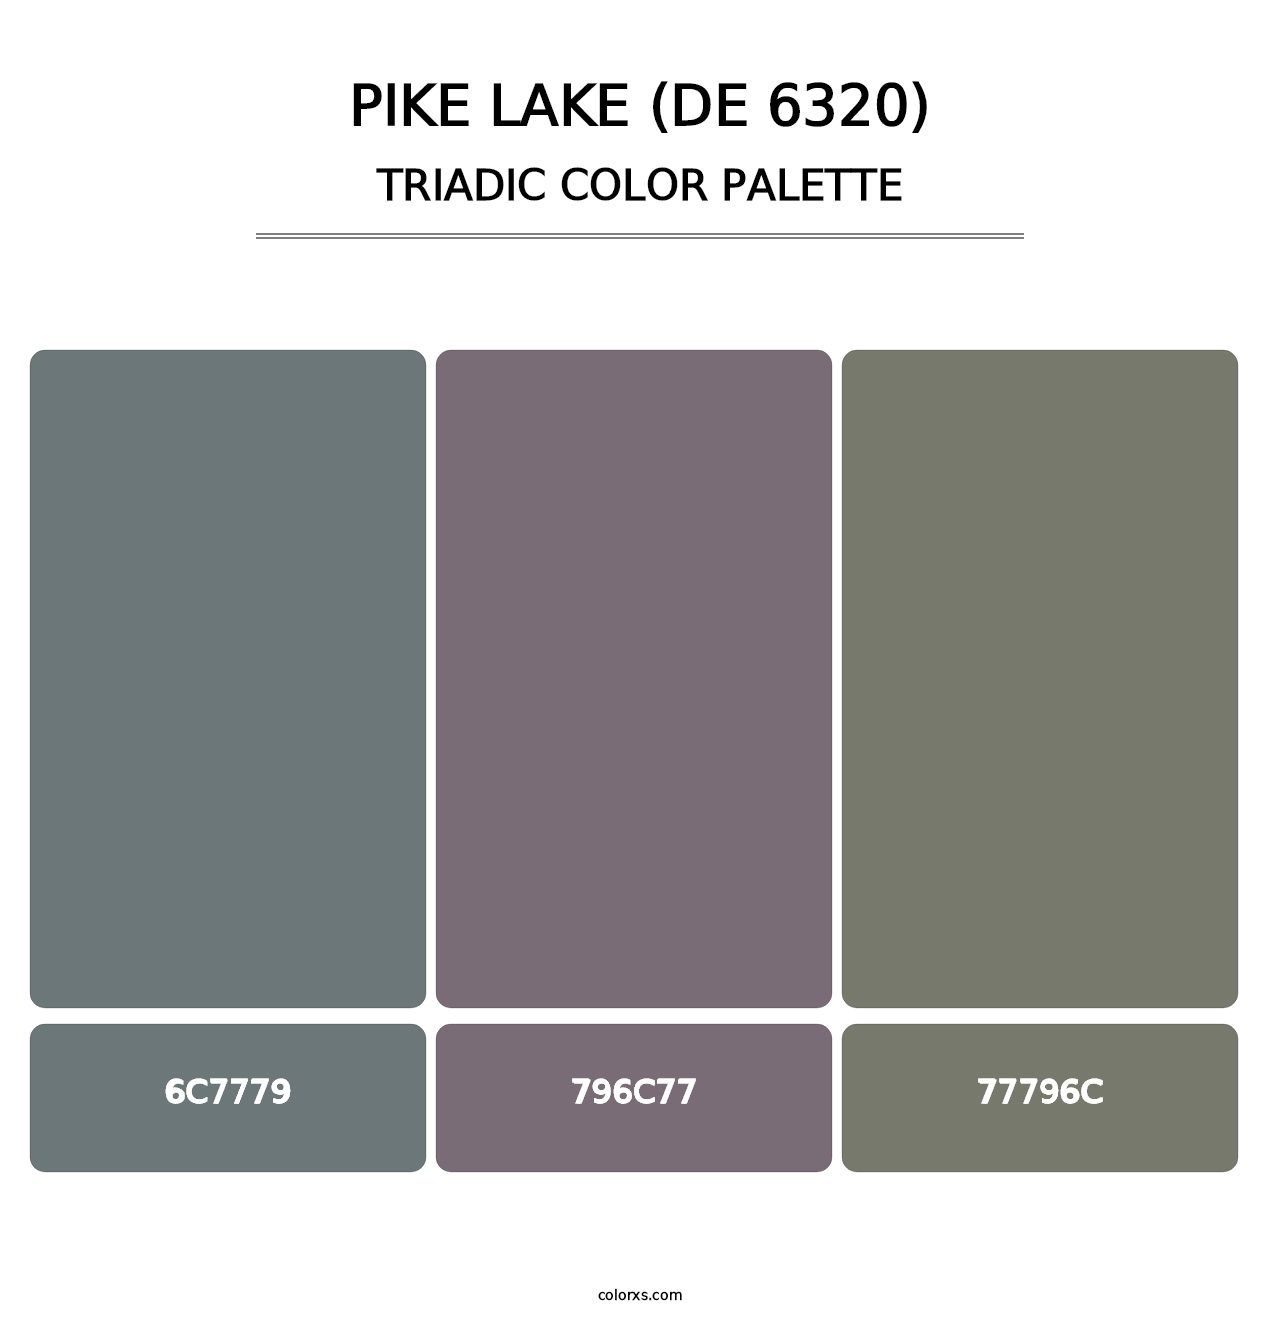 Pike Lake (DE 6320) - Triadic Color Palette